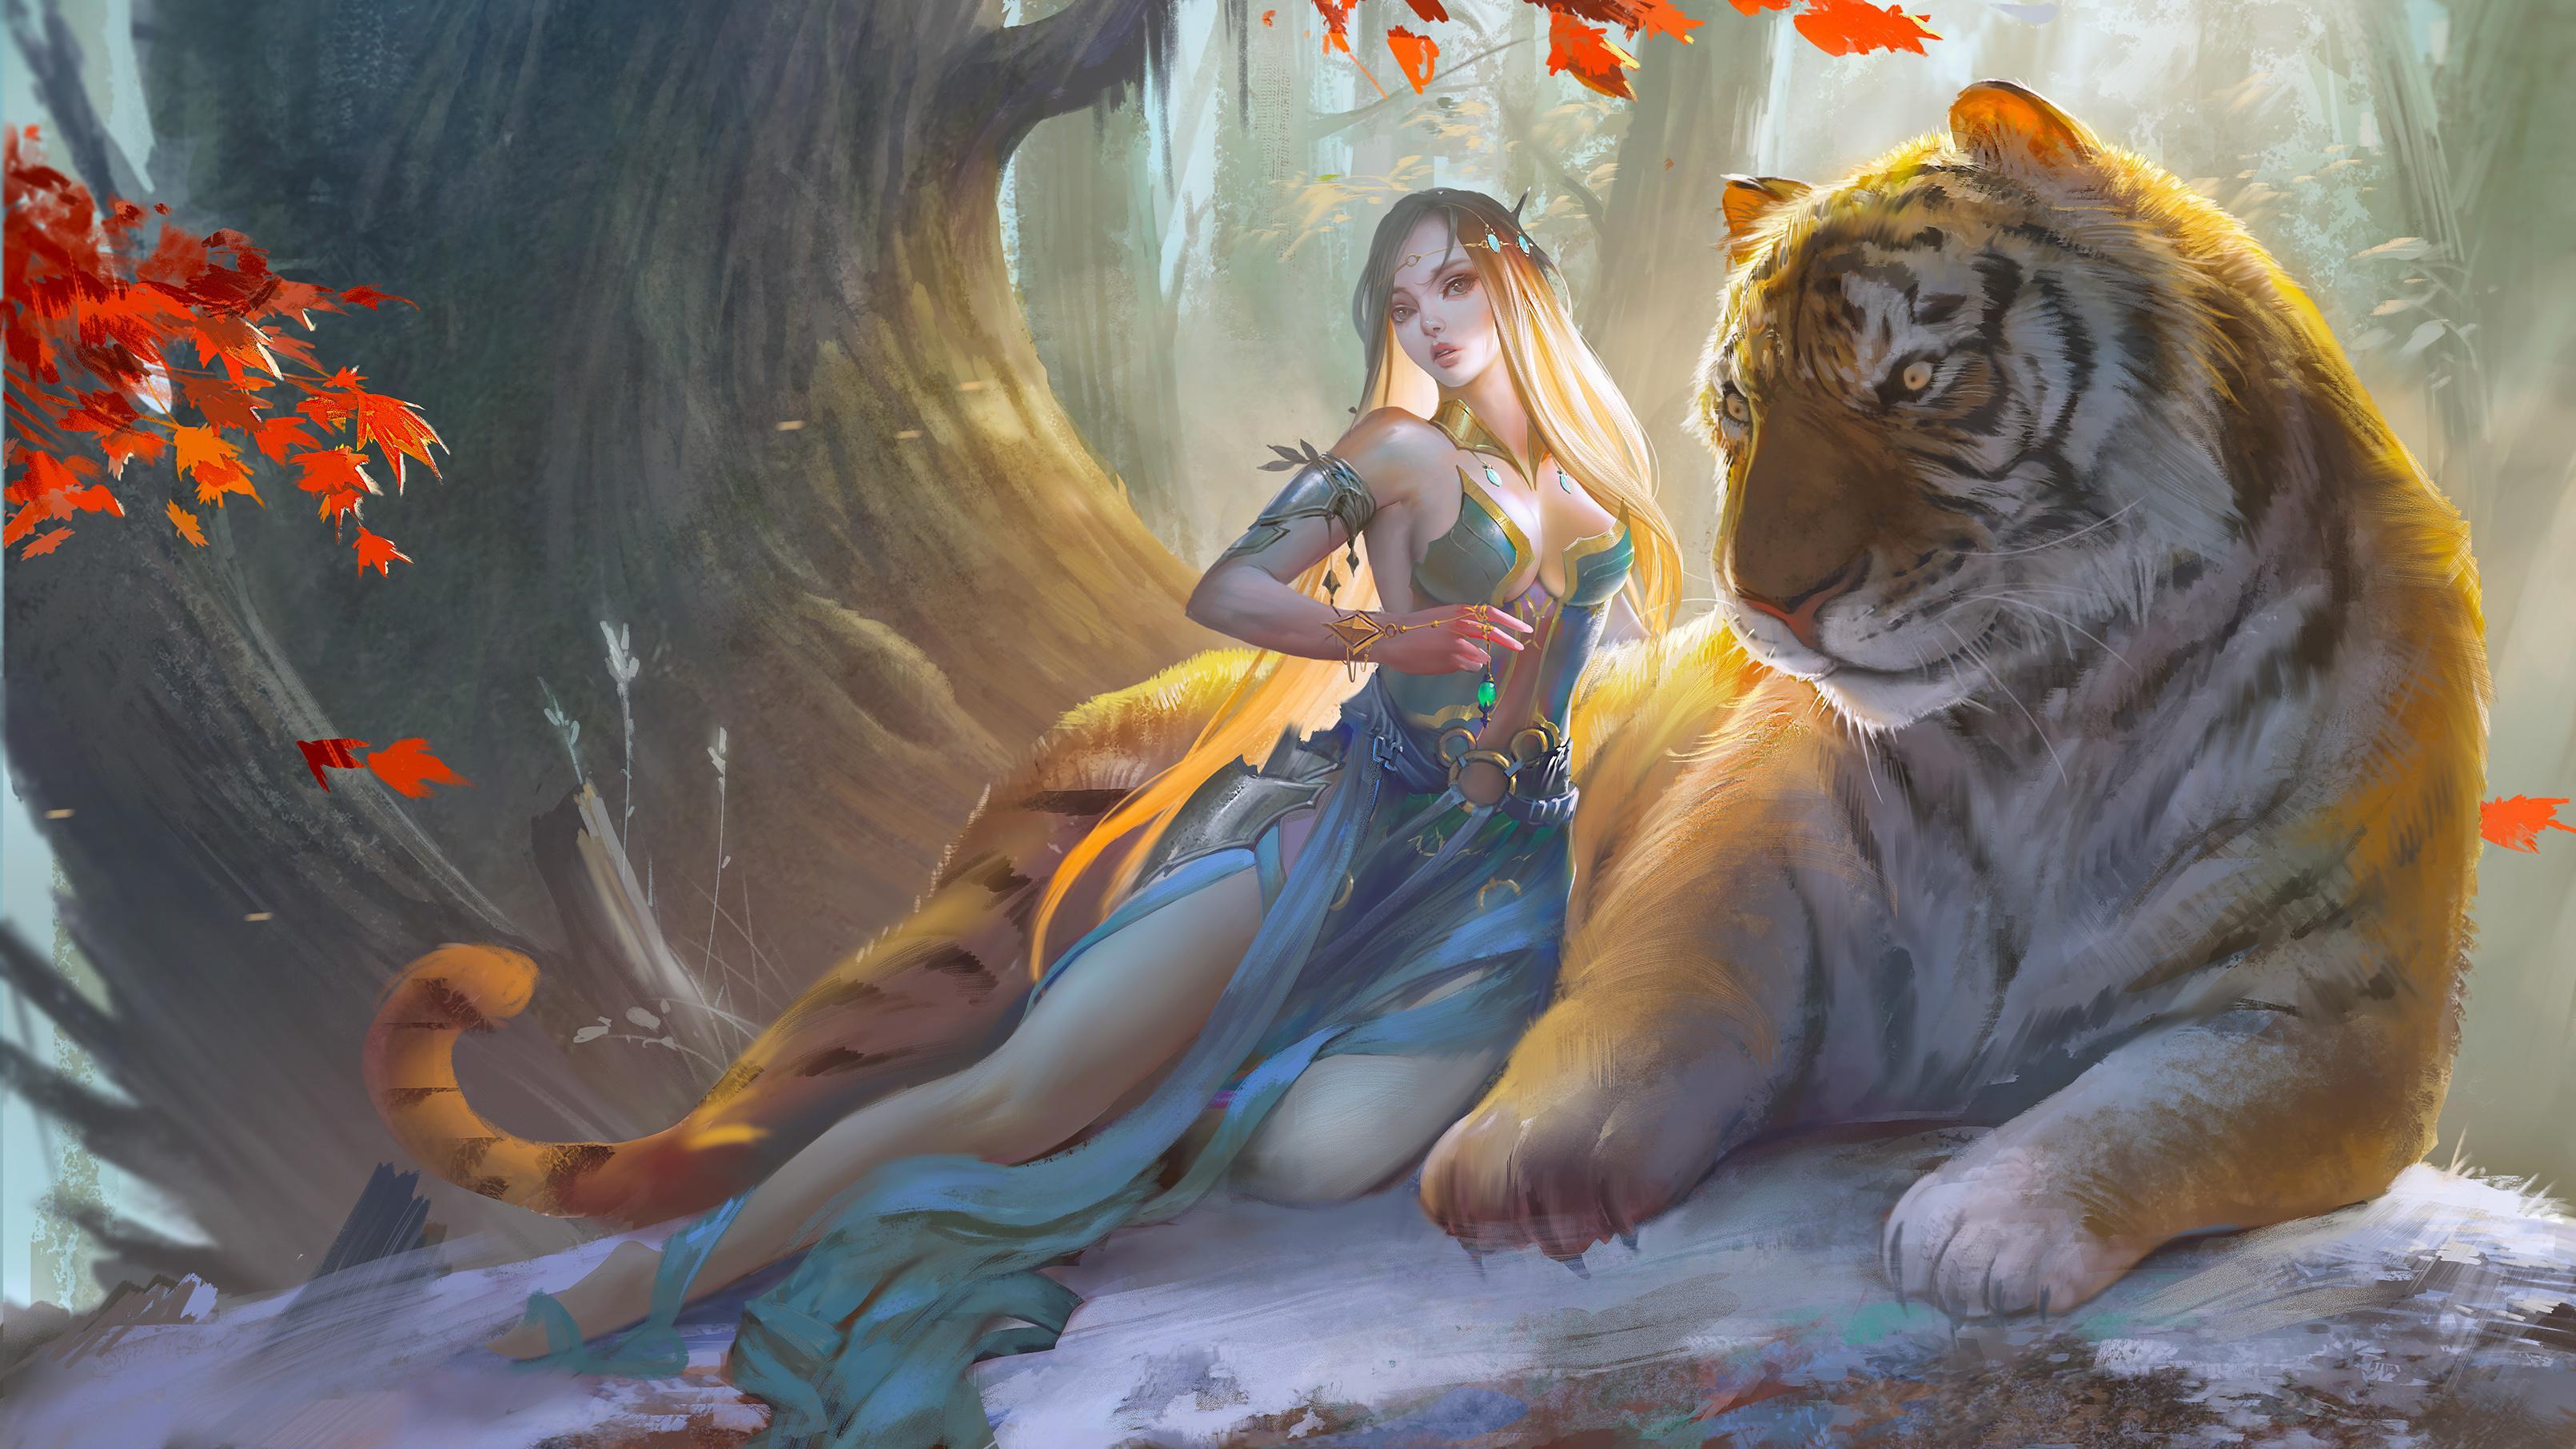 Fantasy Girl With Tiger, HD Fantasy Girls, 4k Wallpaper, Image